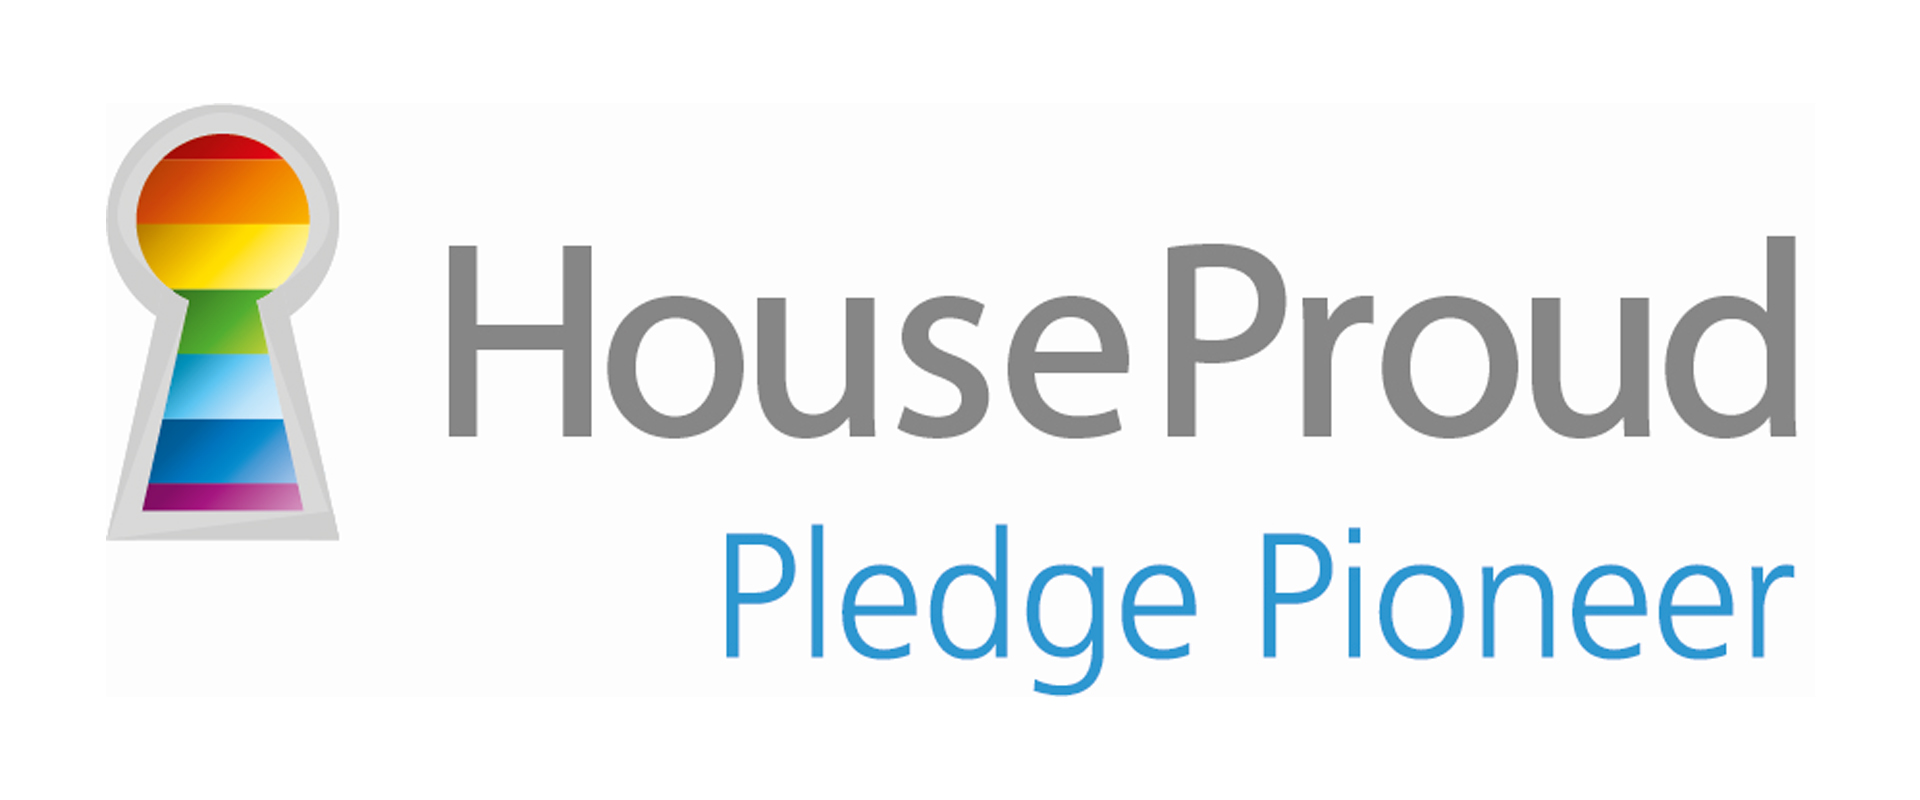 House Proud Pledge Pioneer logo